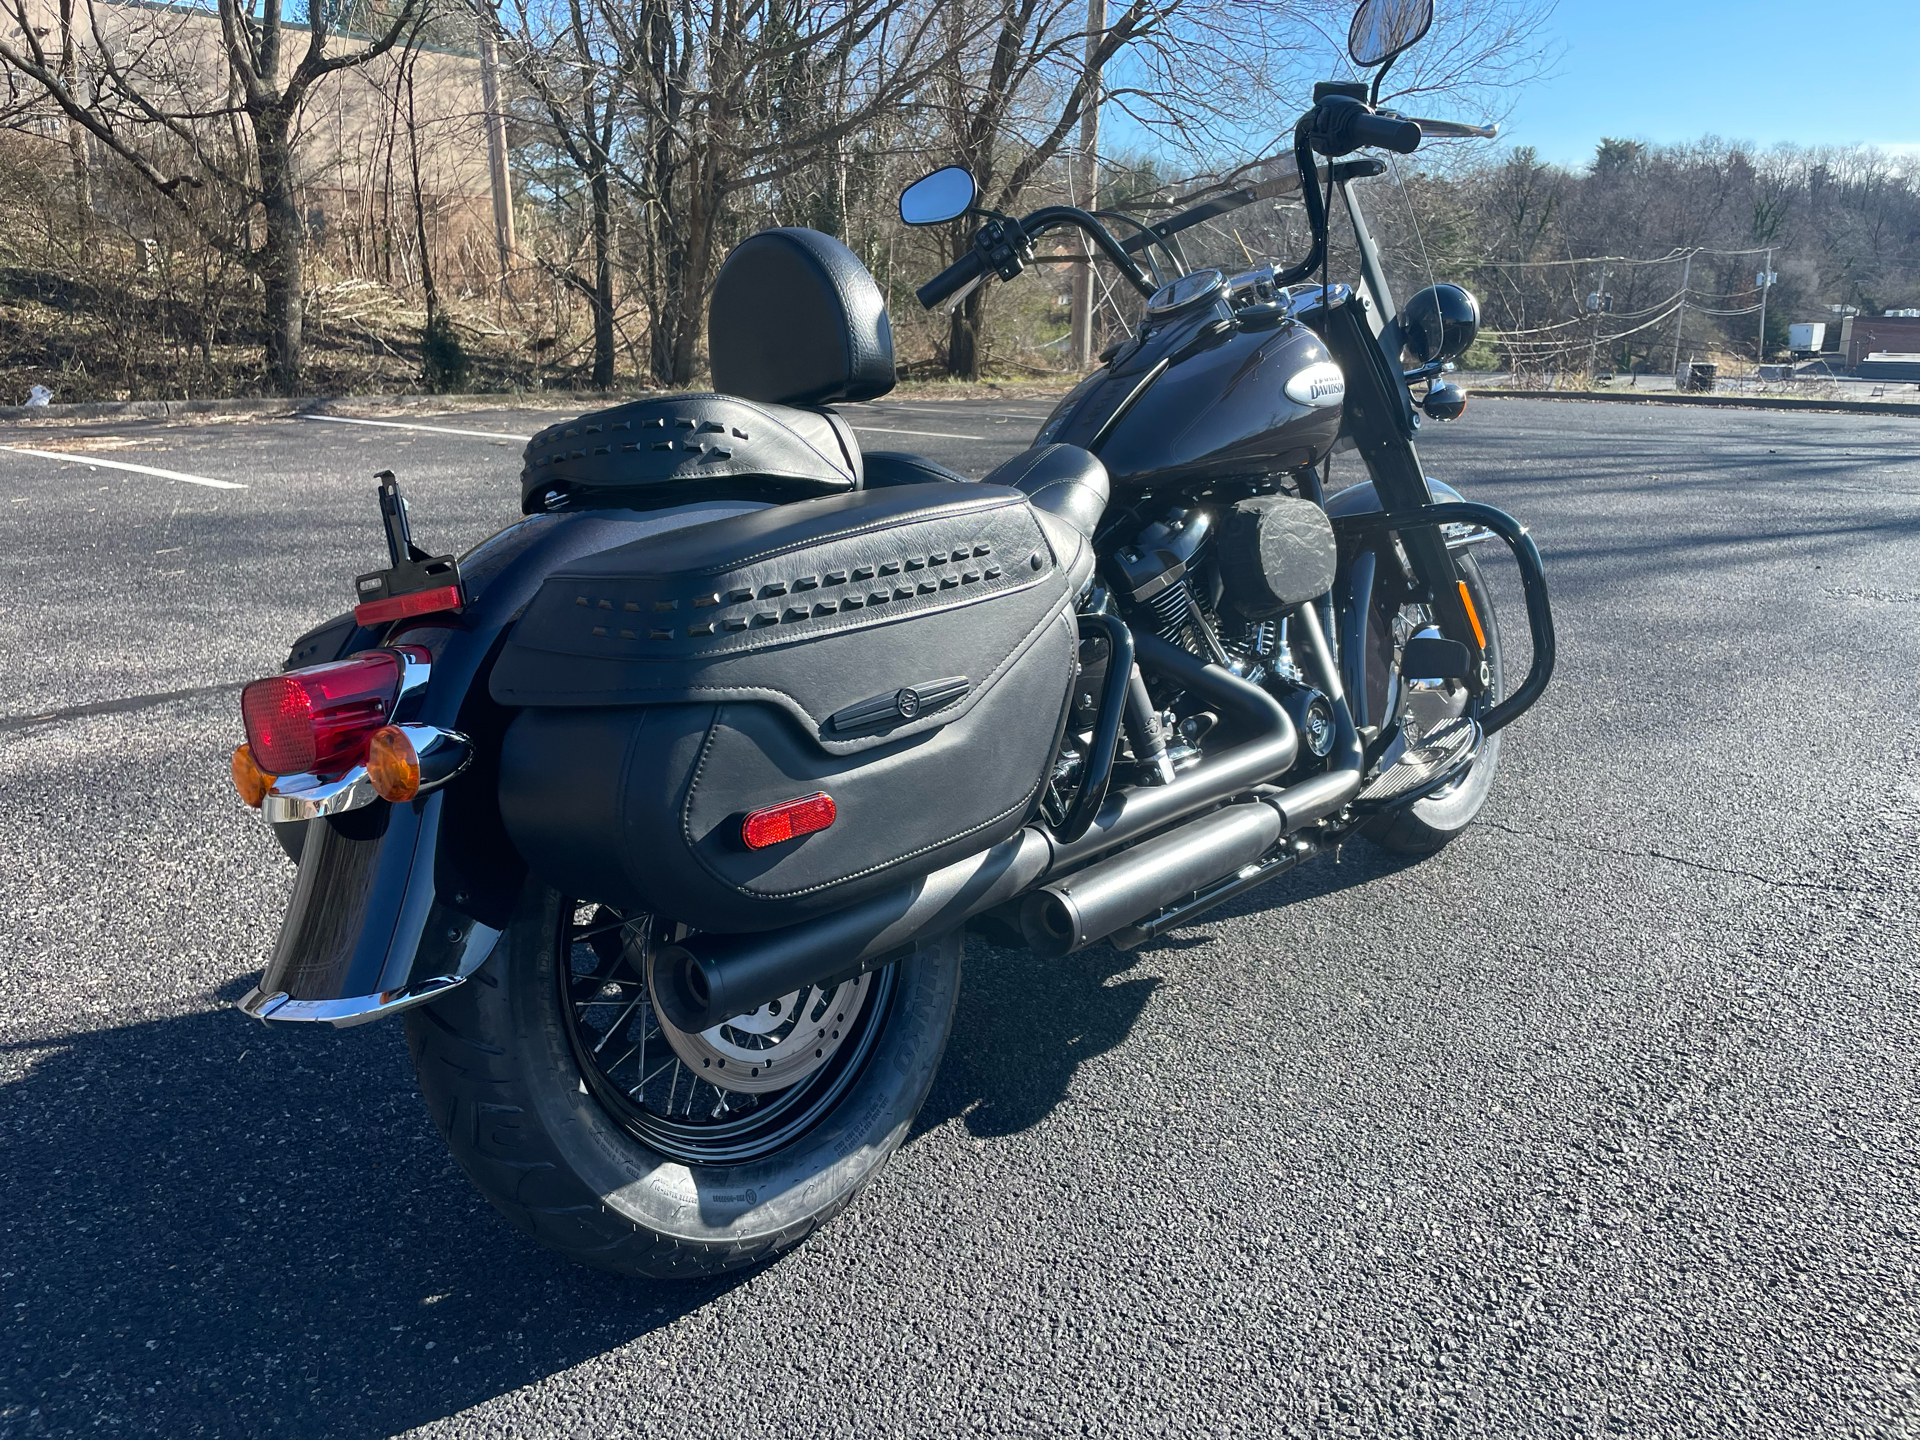 2021 Harley-Davidson Heritage Softail in Roanoke, Virginia - Photo 5